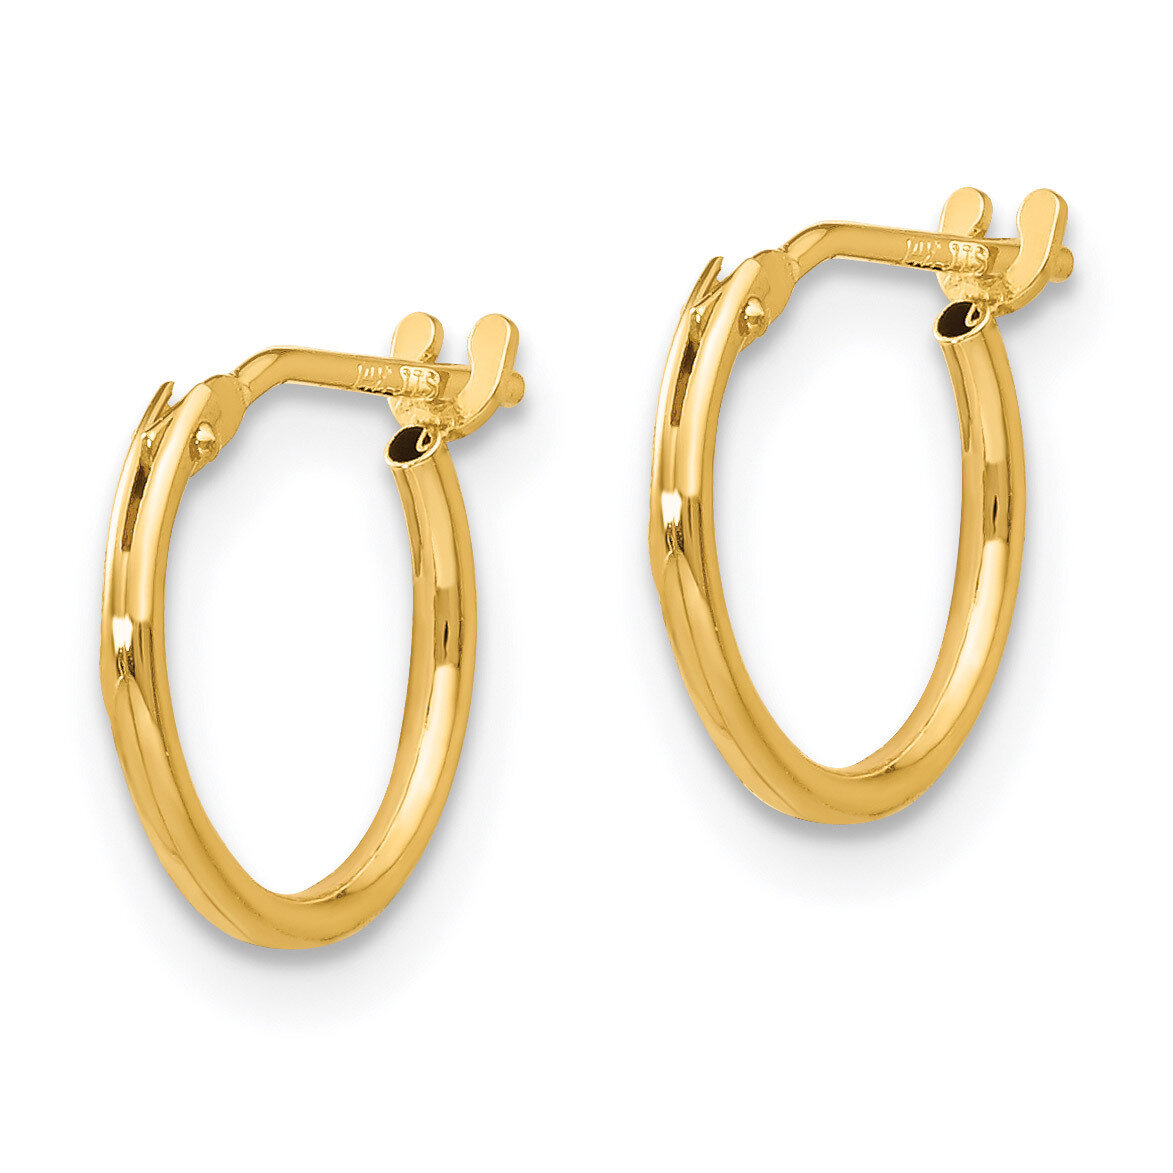 1mm Hoop Earrings - 14k Gold SE219